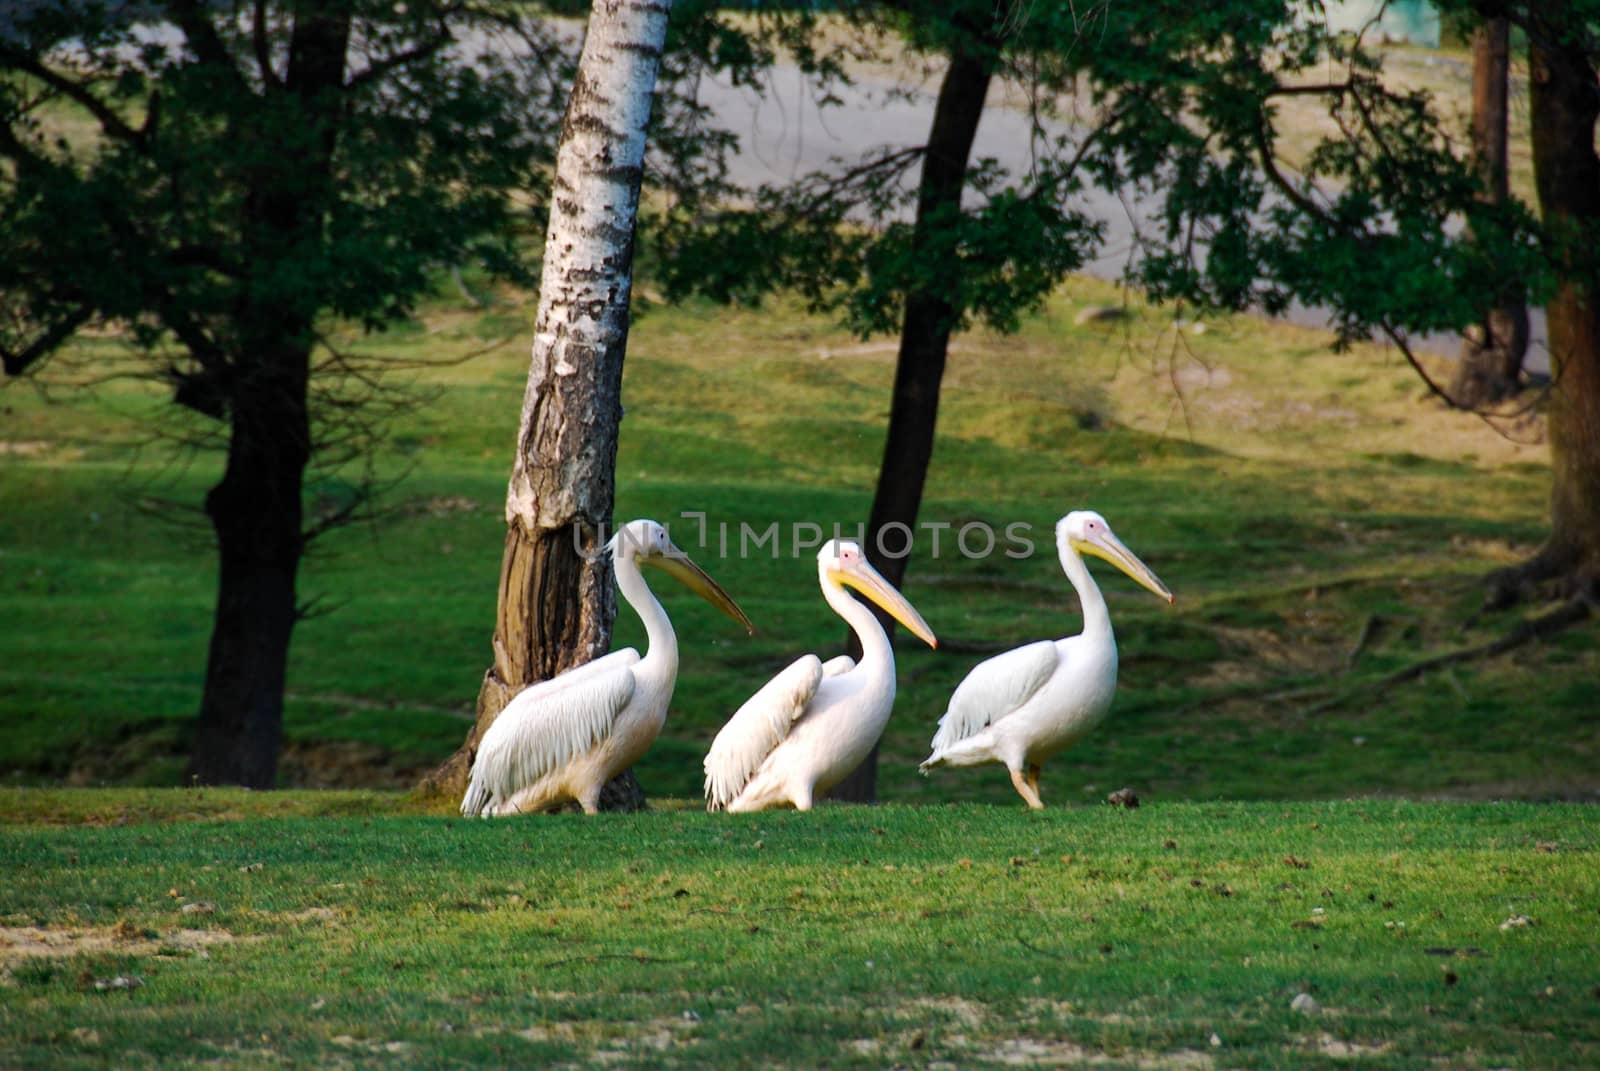 Pelicans walking in a meadow - Park in Italy